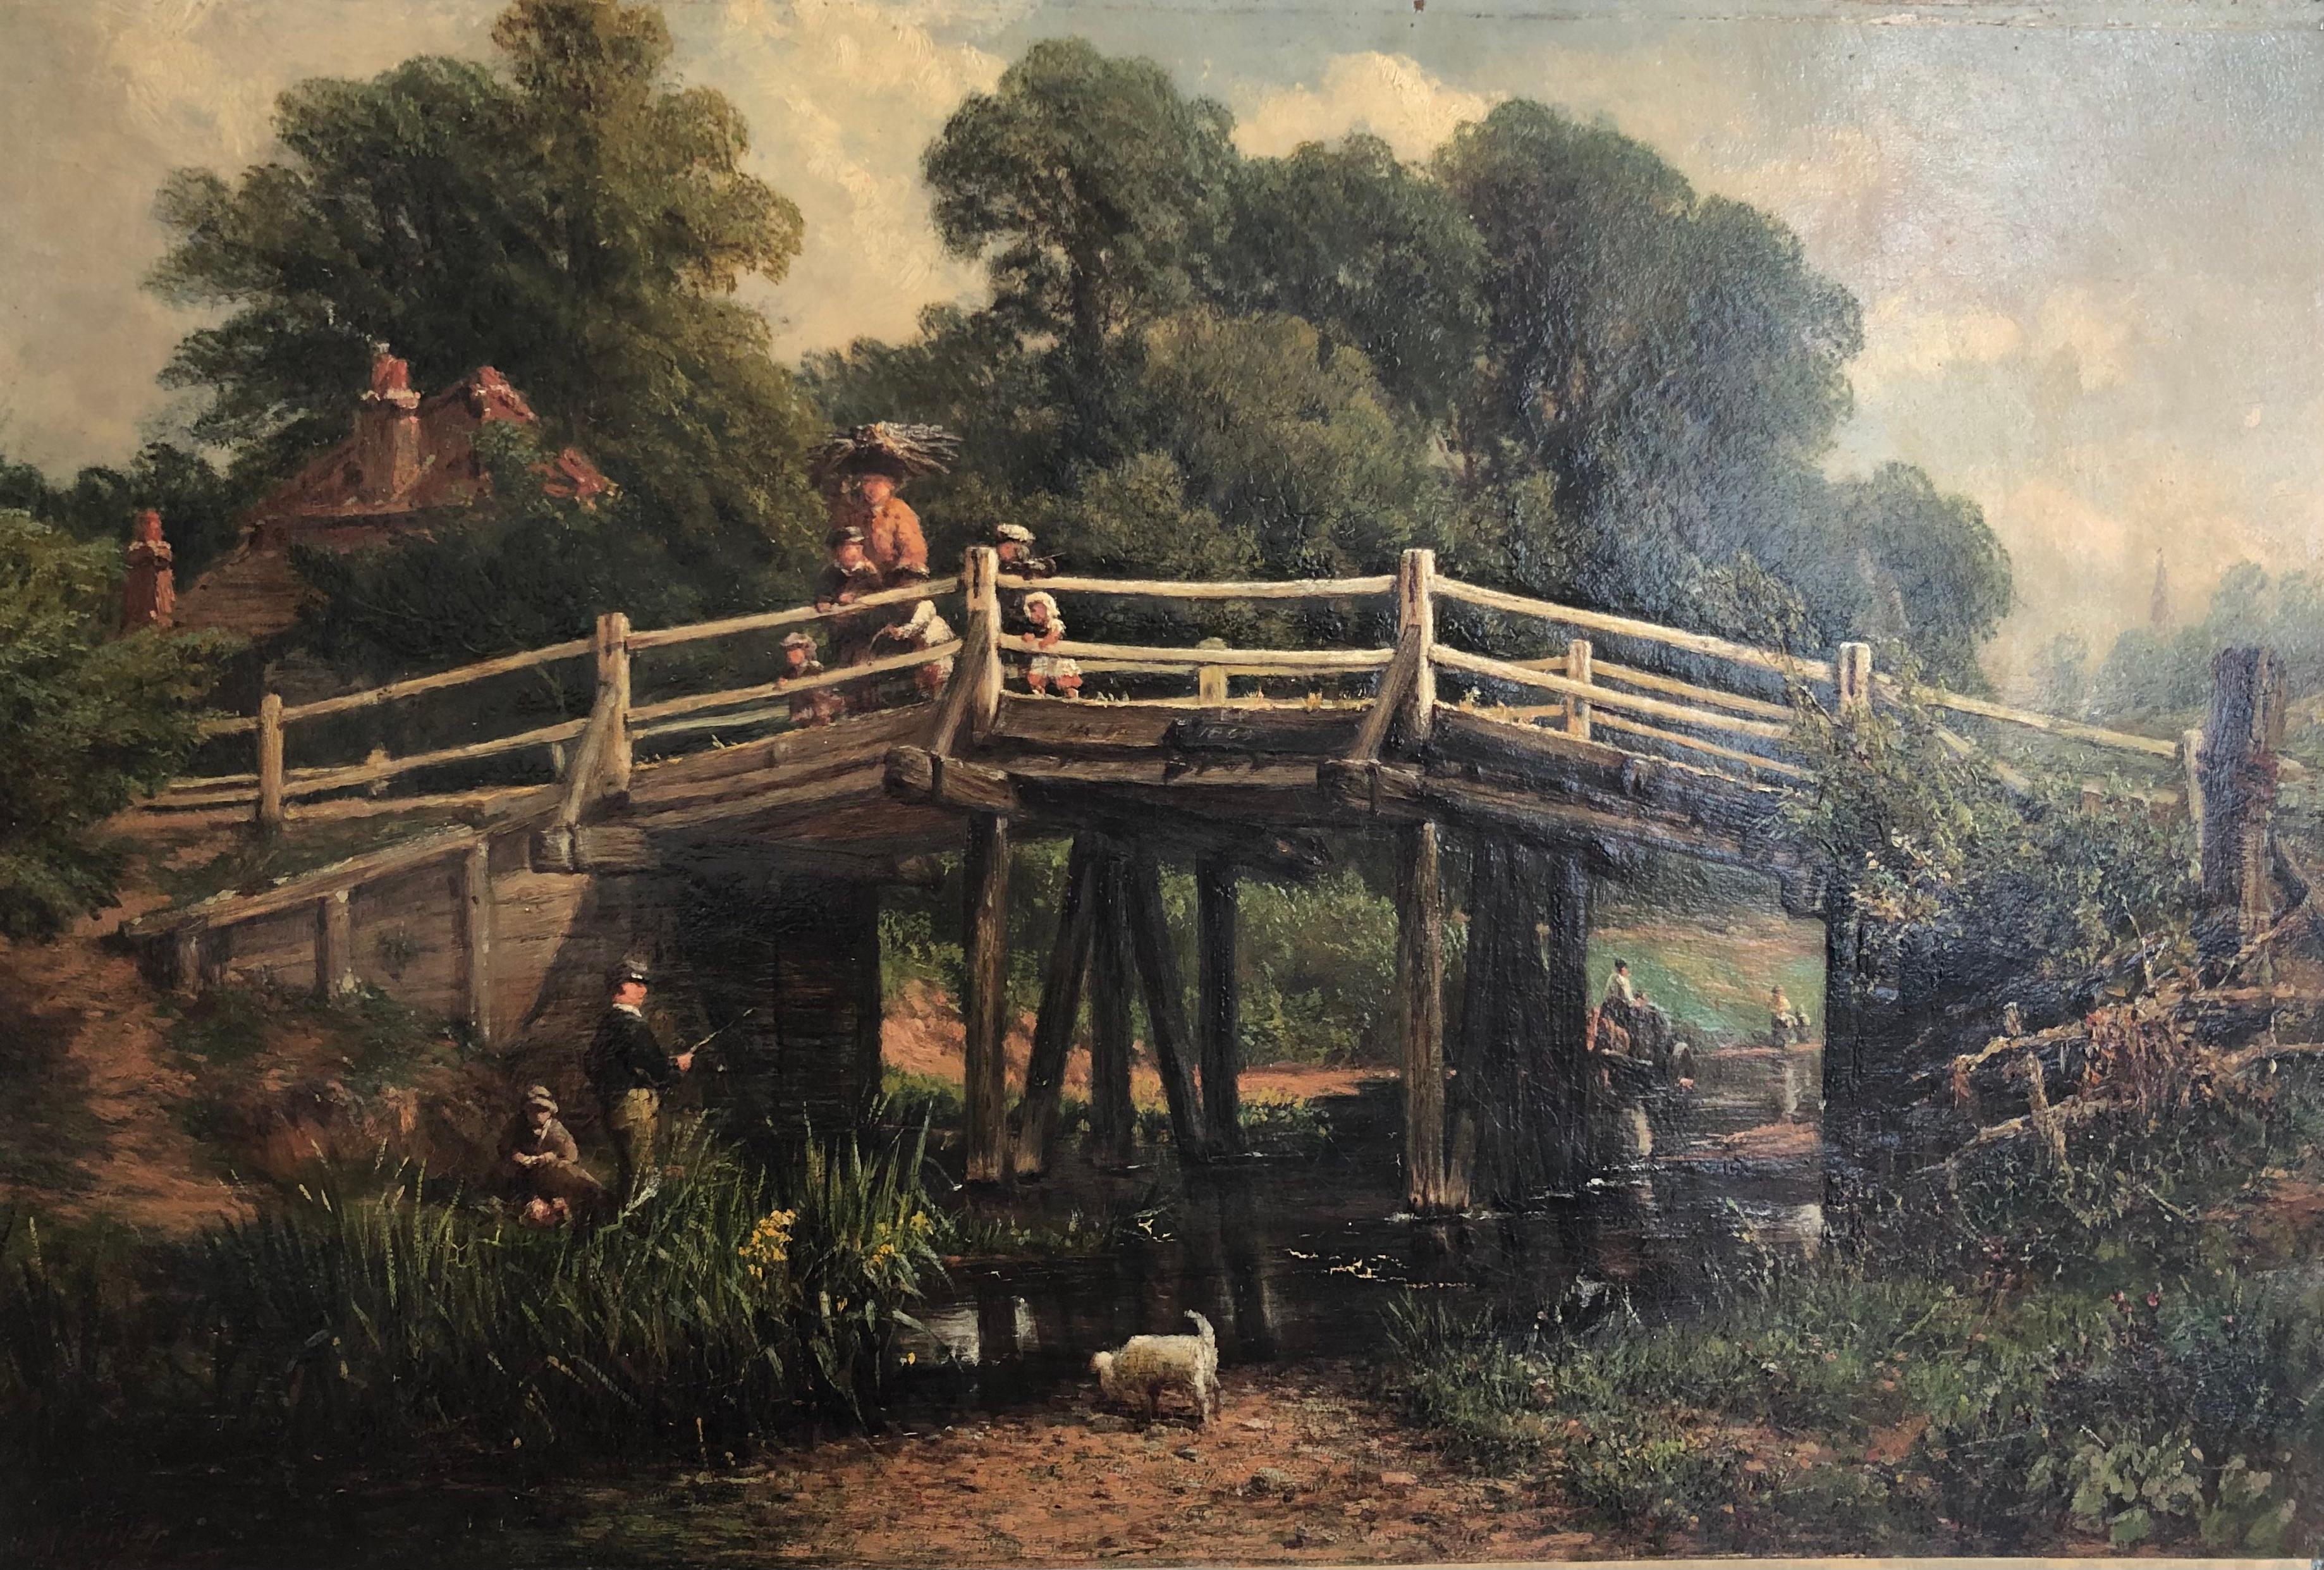 Landscape Painting Joseph-Moseley Barber - Paysage rural animé